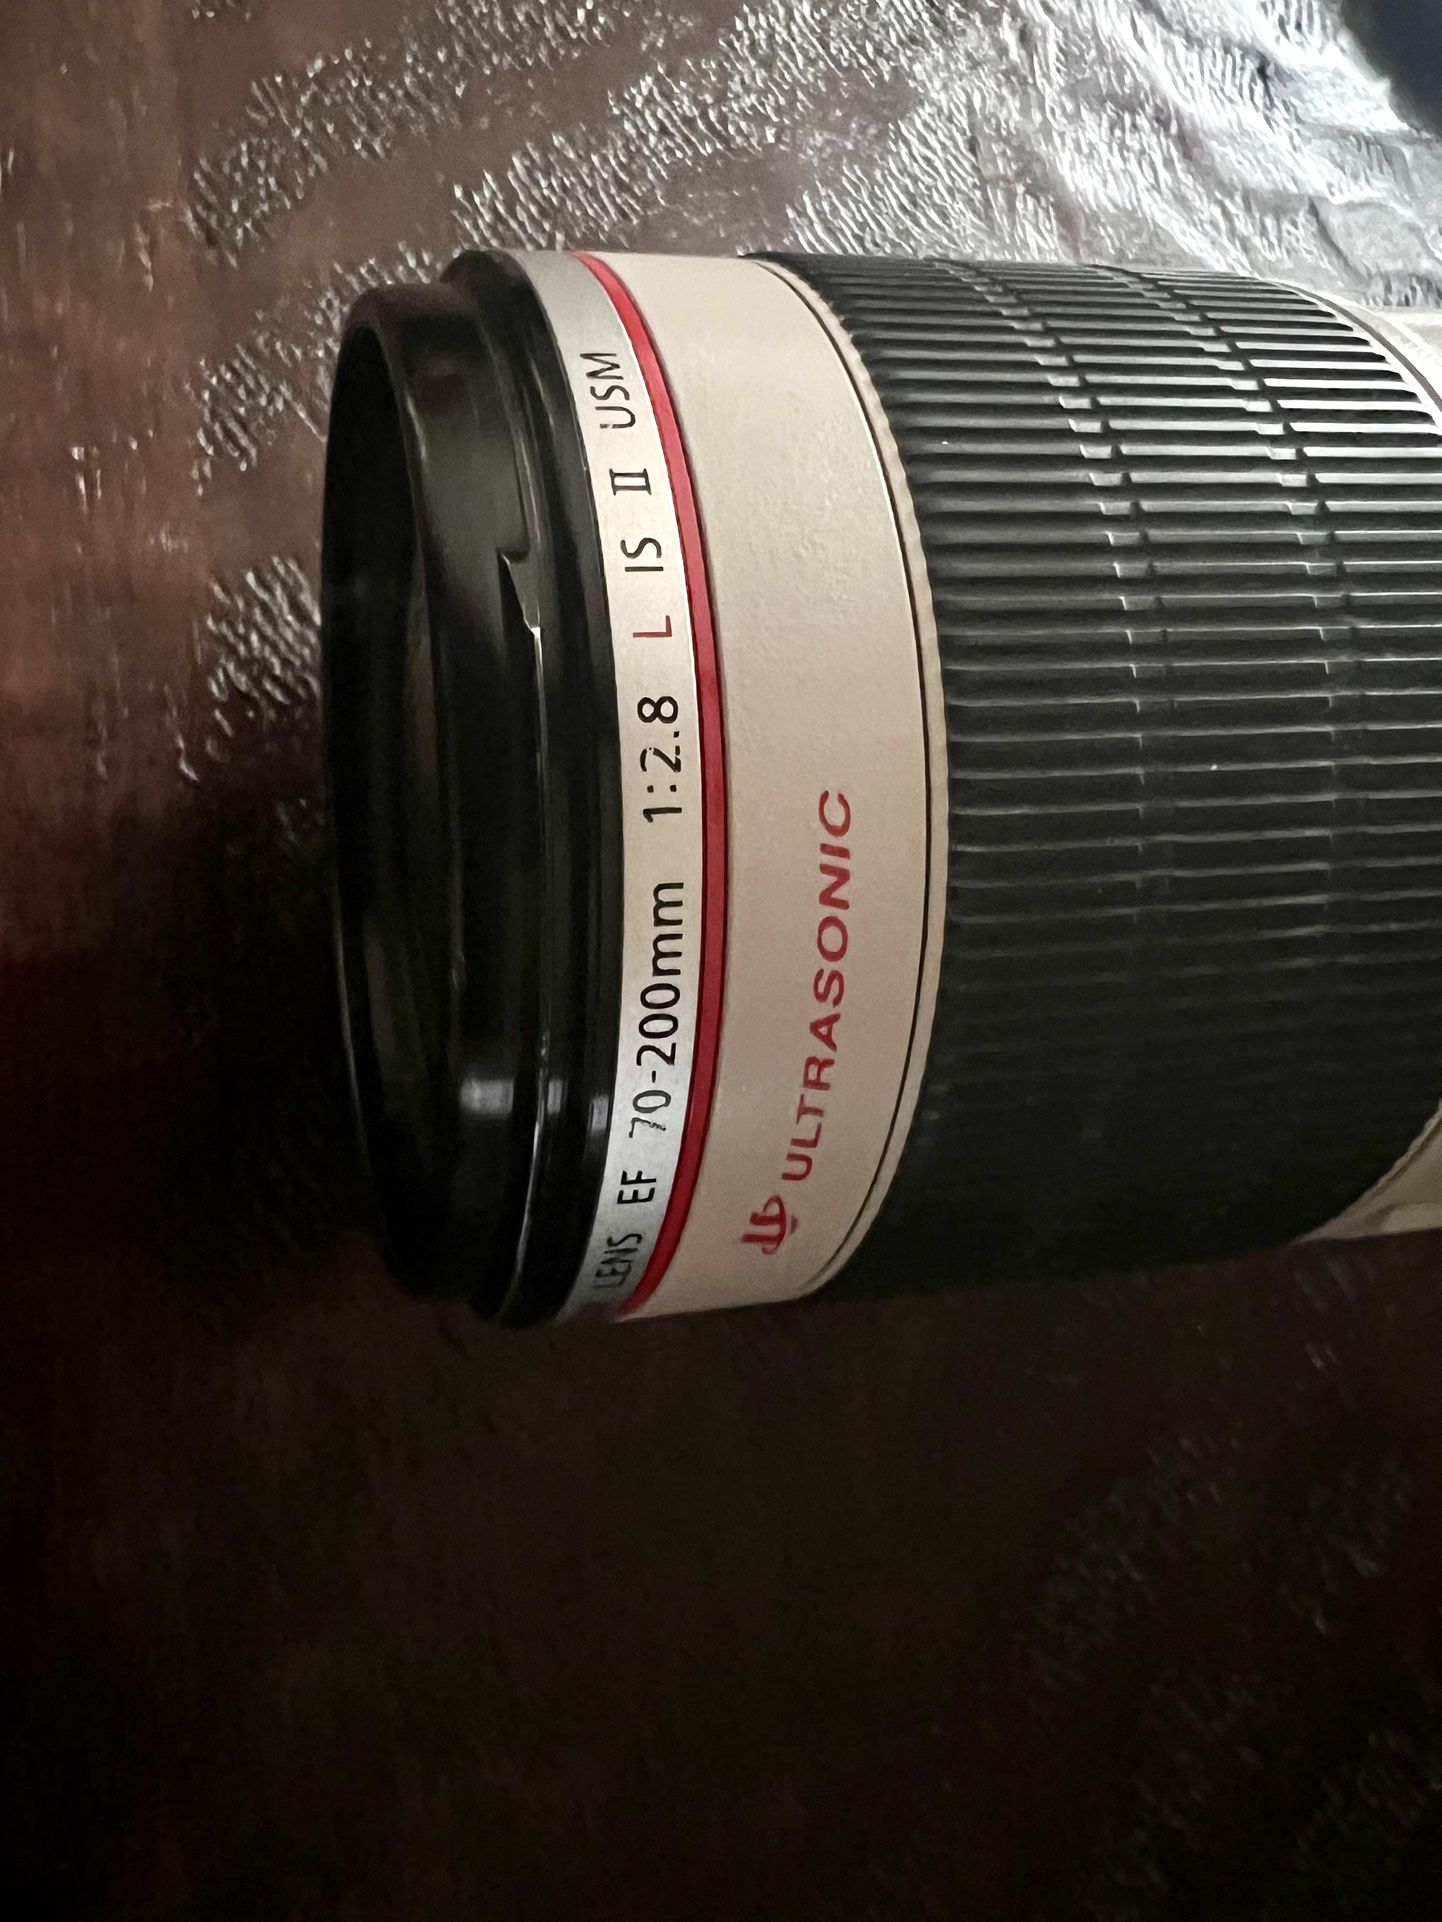 Canon 70-200mm 1:2.8 L IS 2 USM Lens